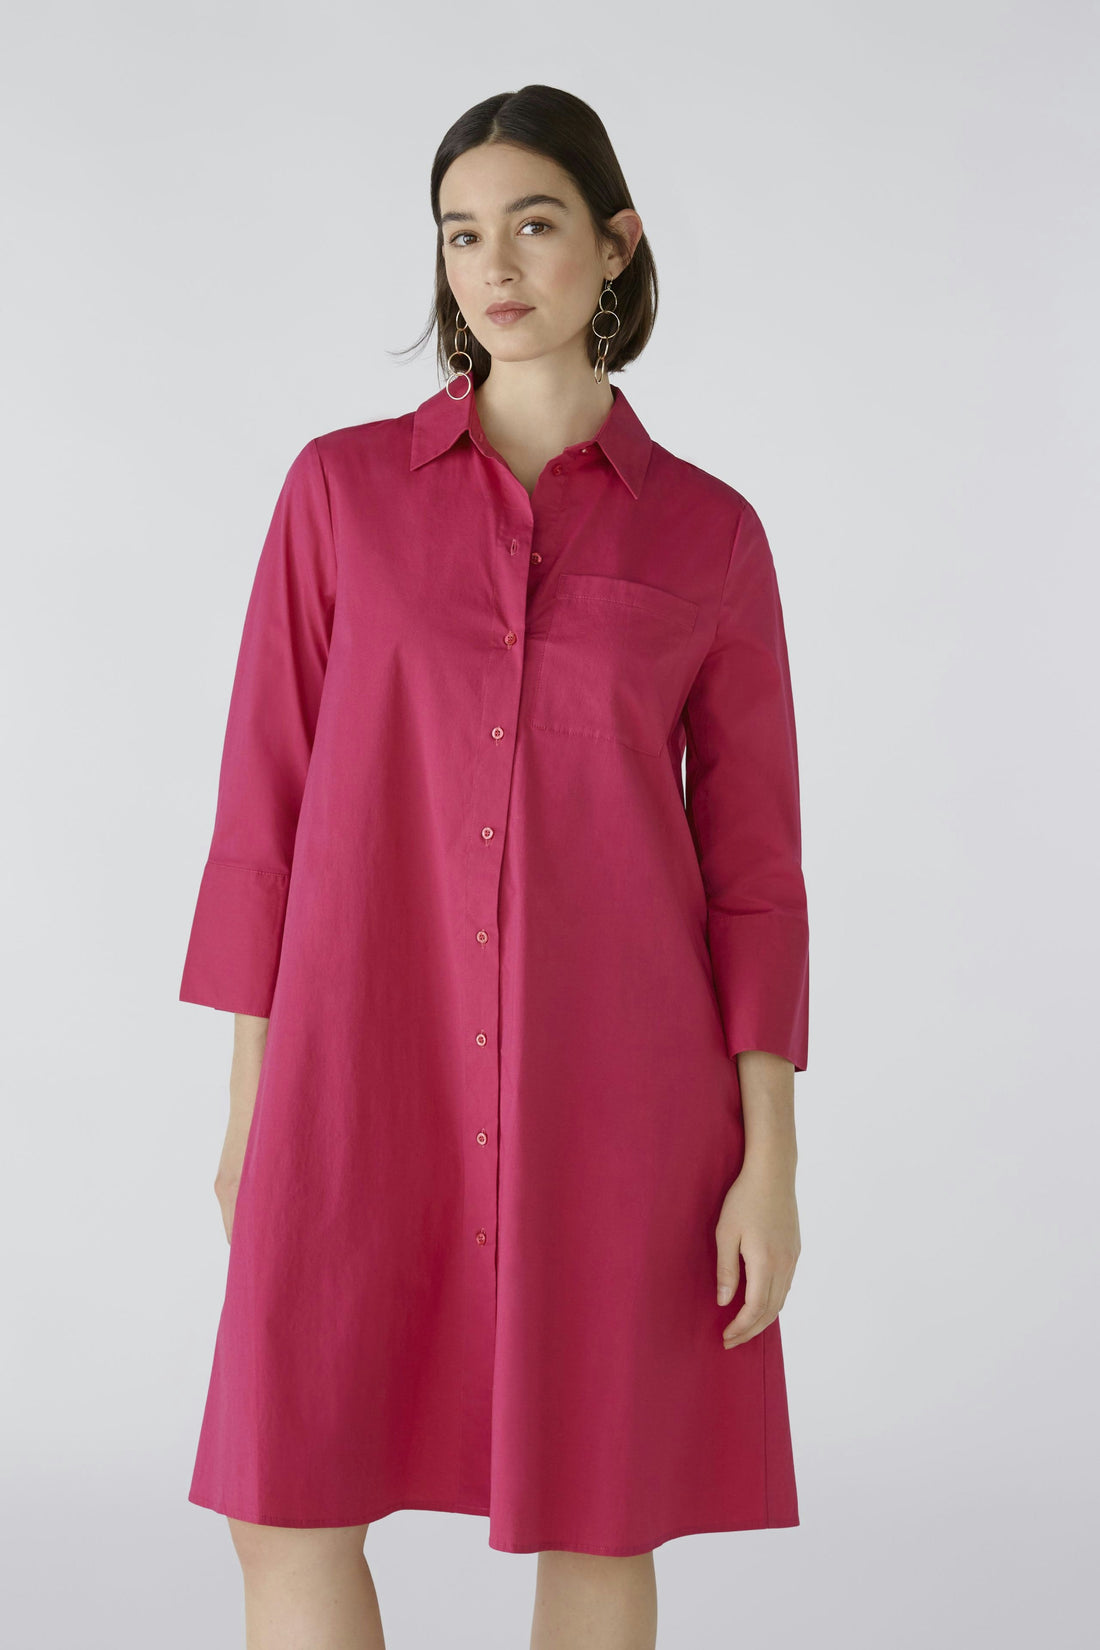 Shirt Blouse Dress Elastic Cotton_87124_3438_02